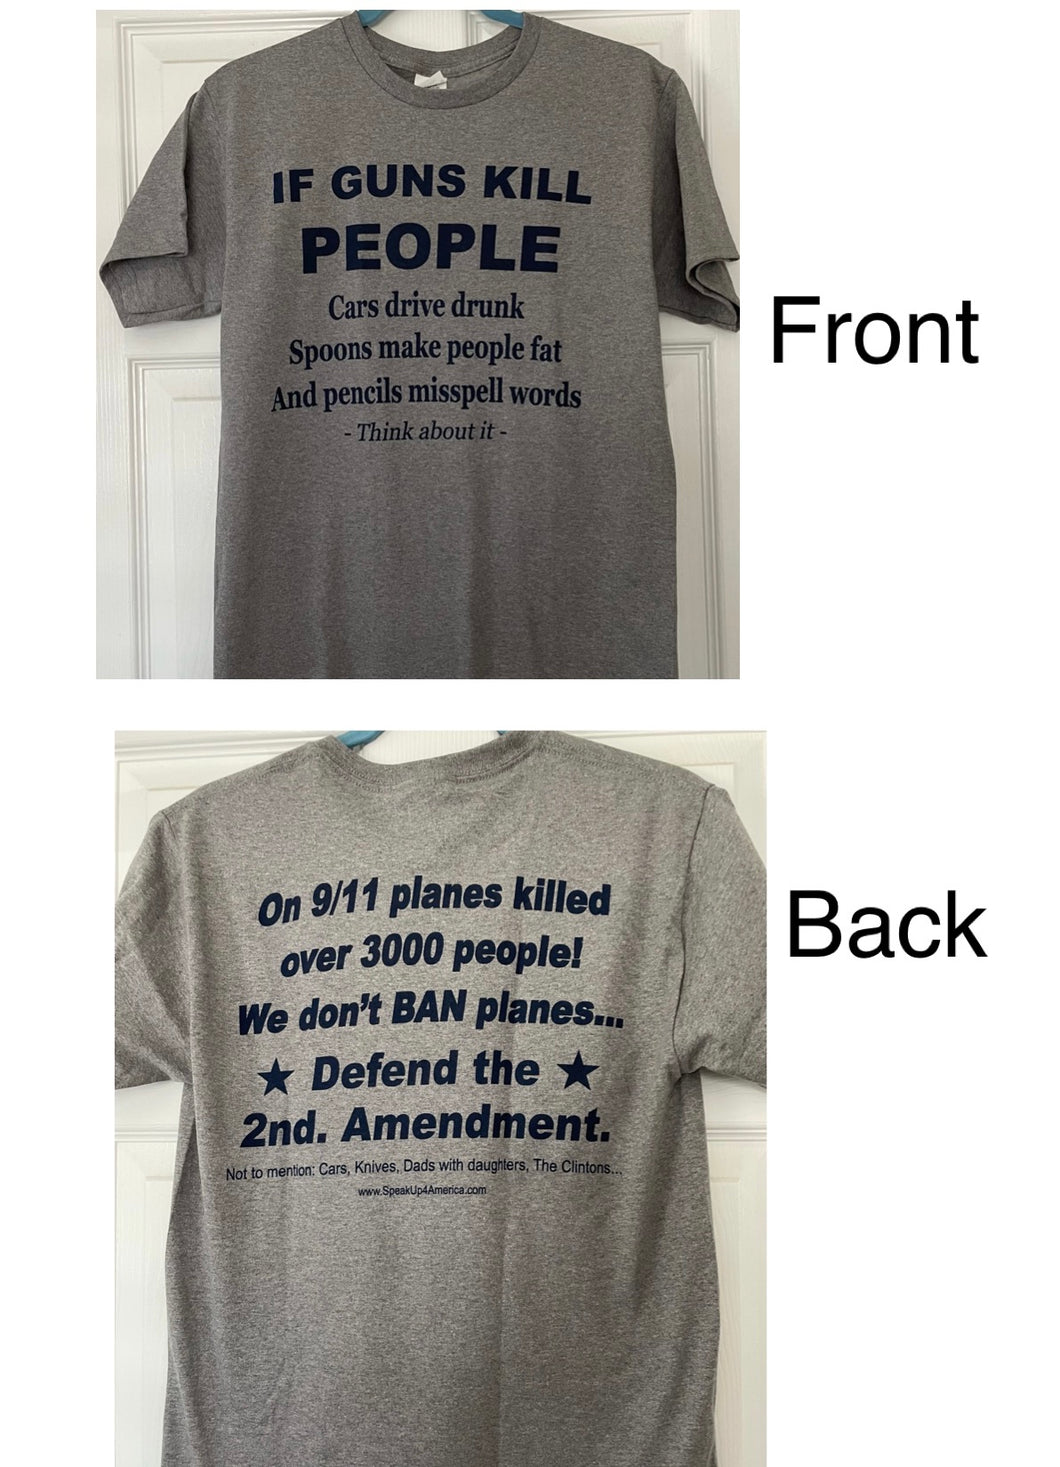 If guns kill people t-shirt